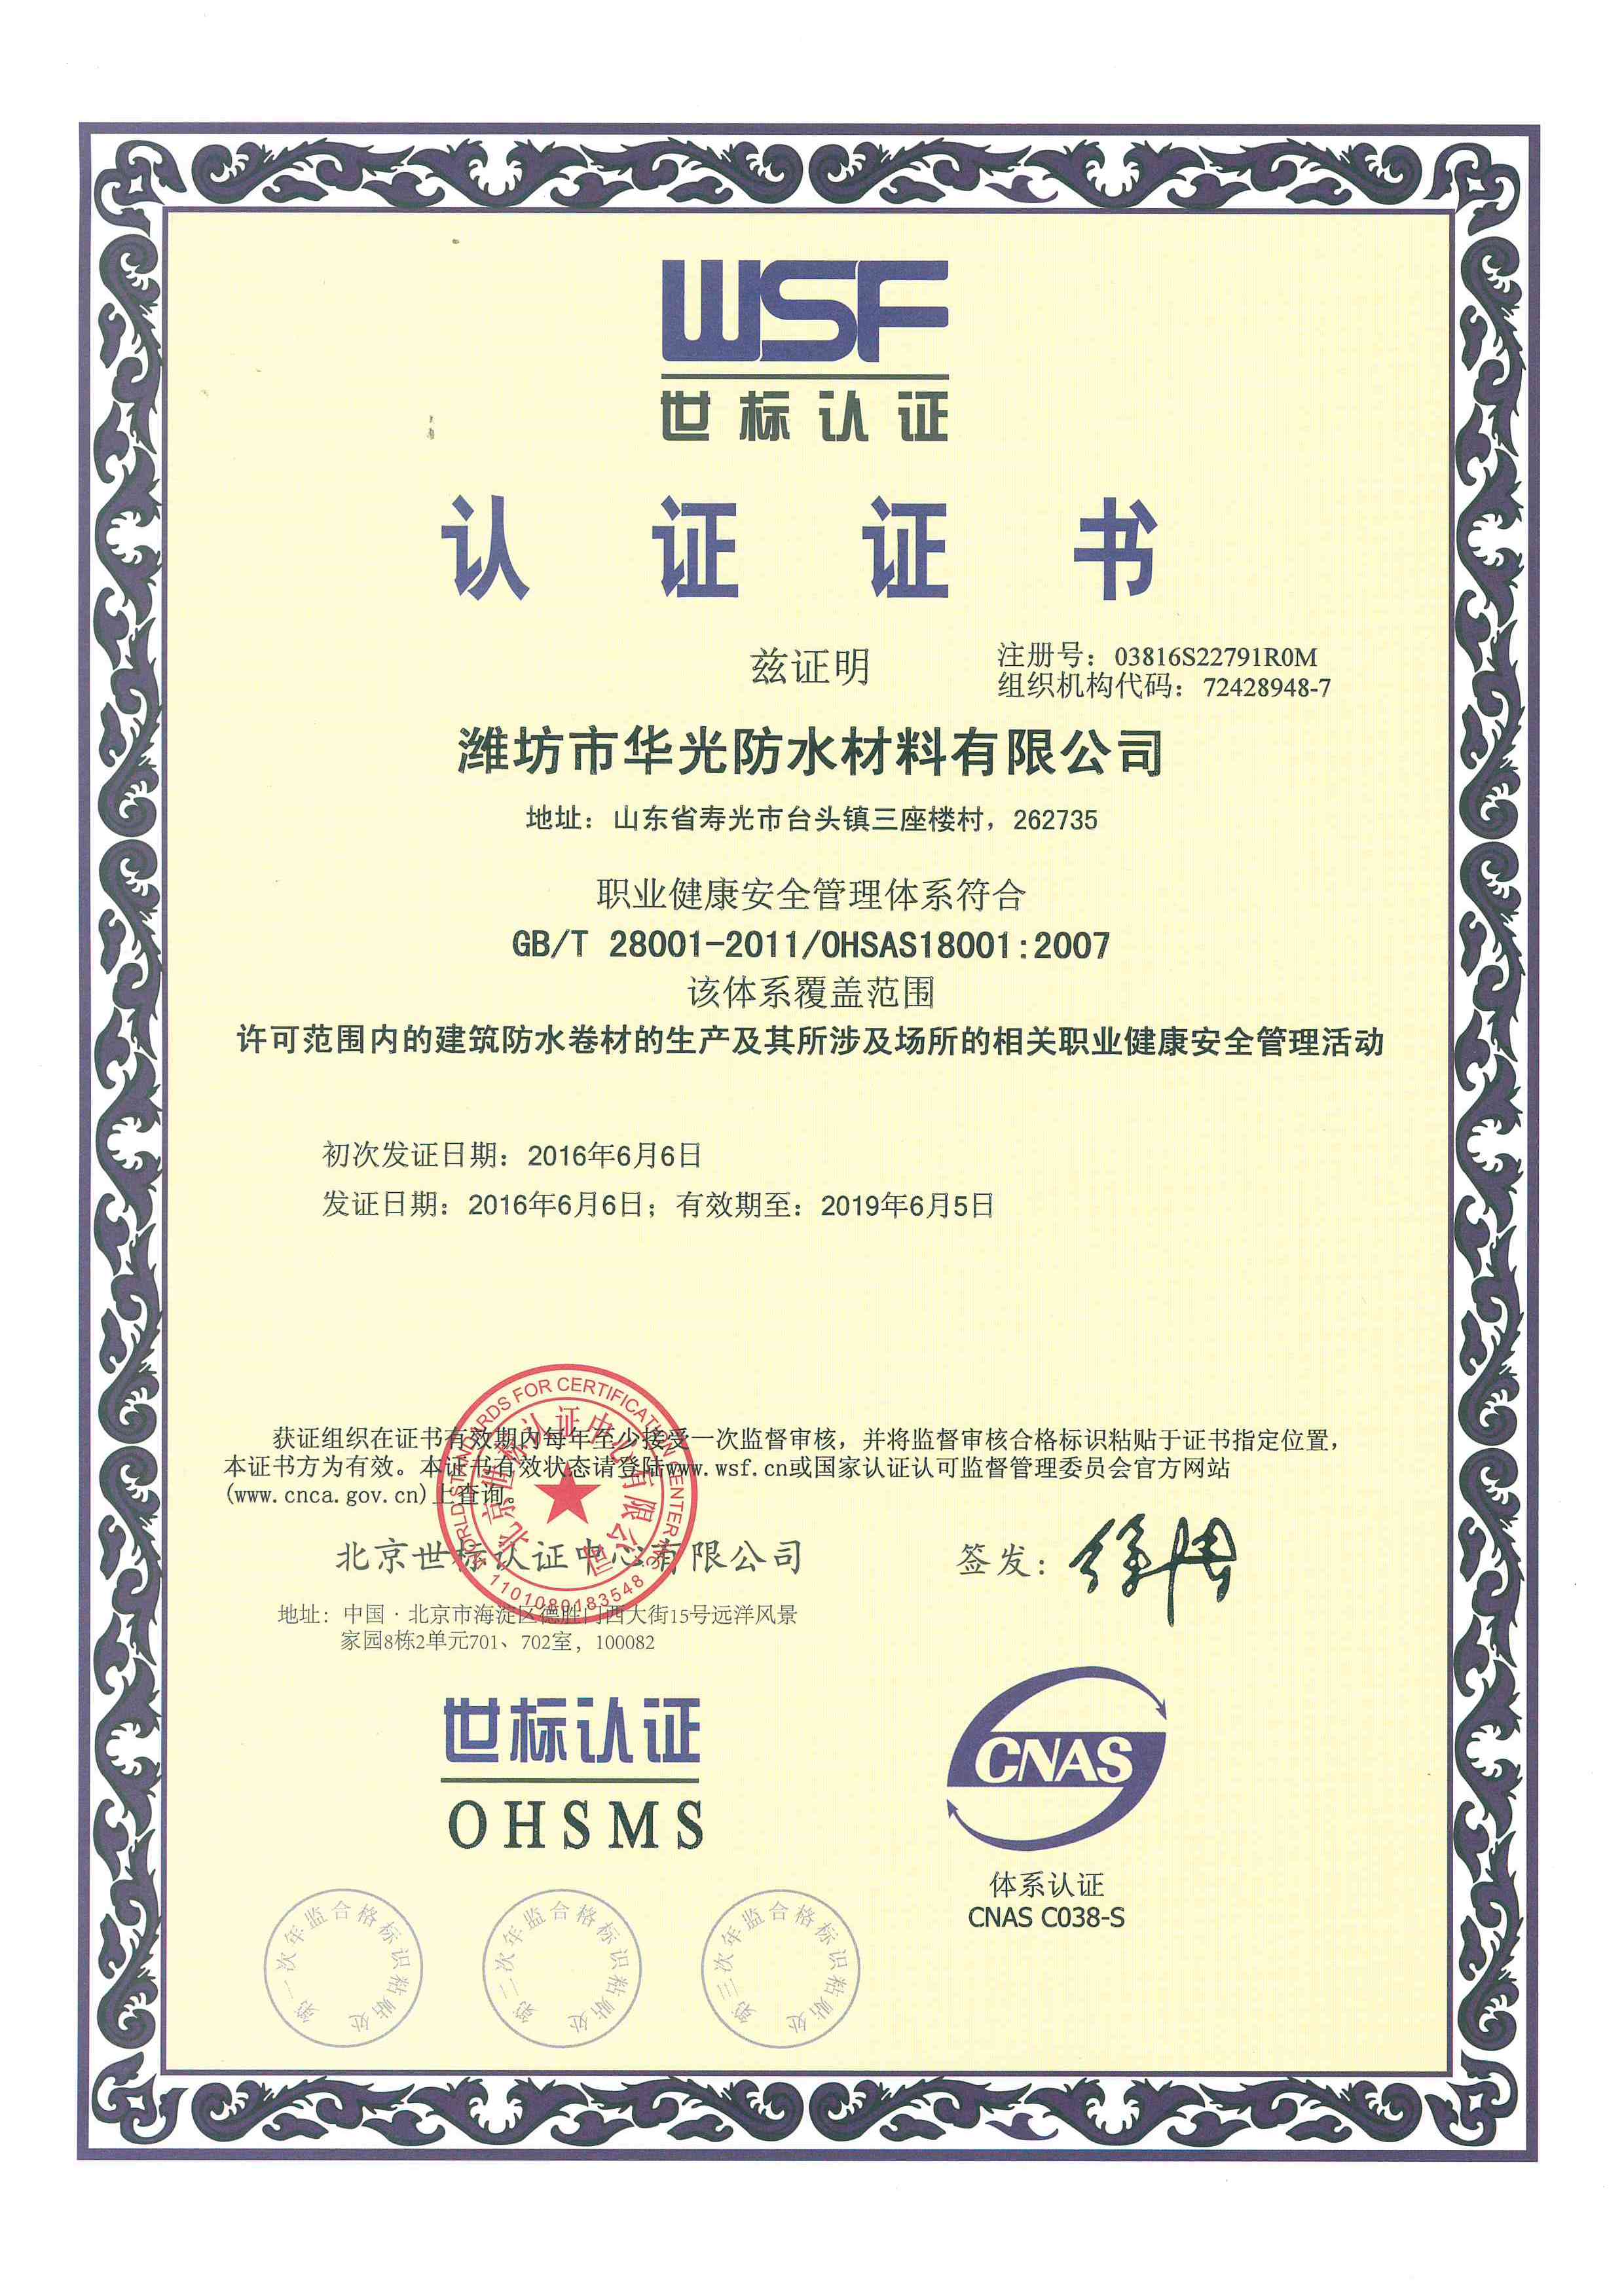 World standard certification